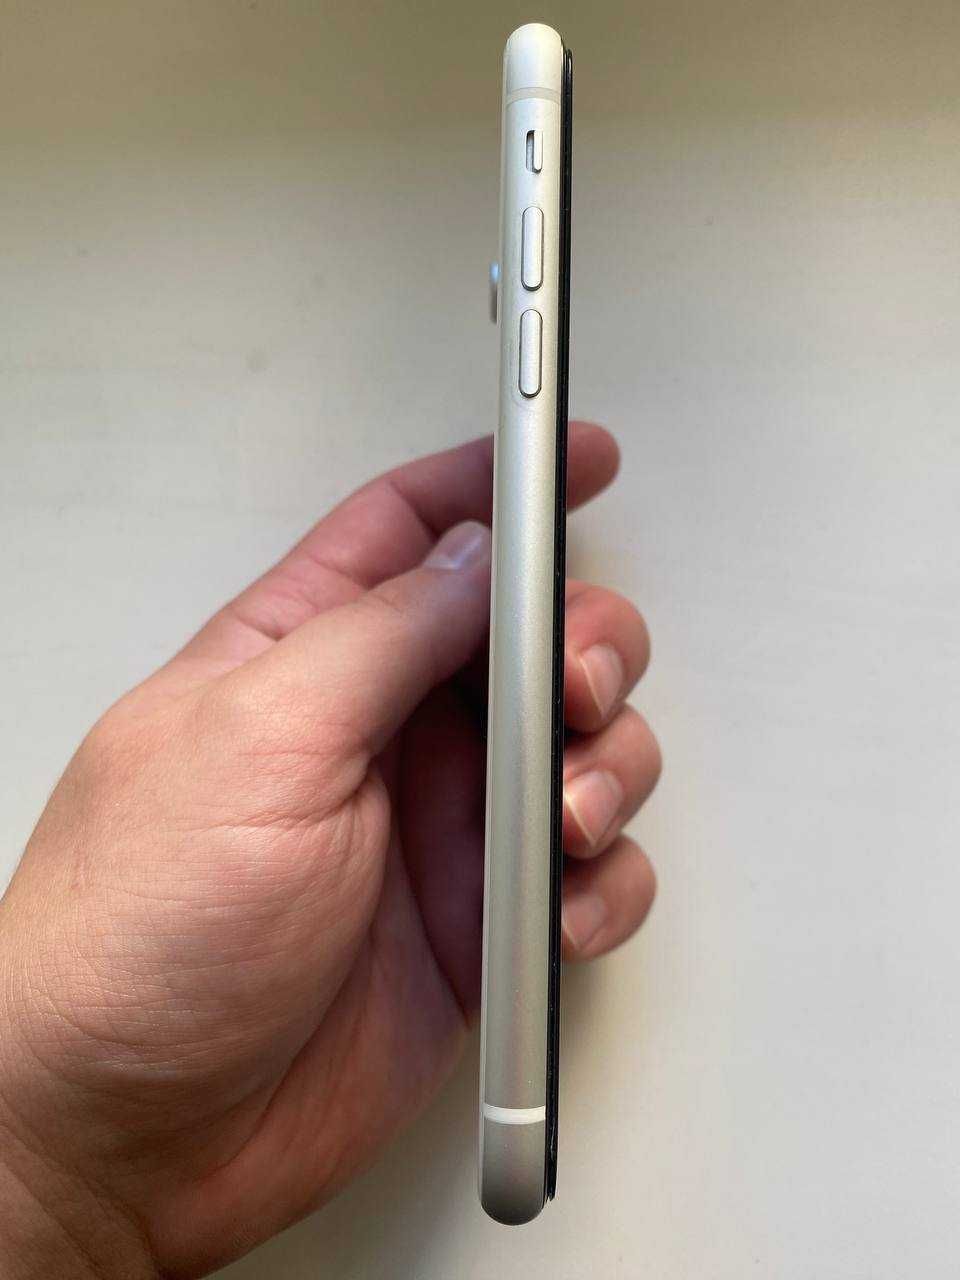 IPhone XR 64 GB White Neverlock